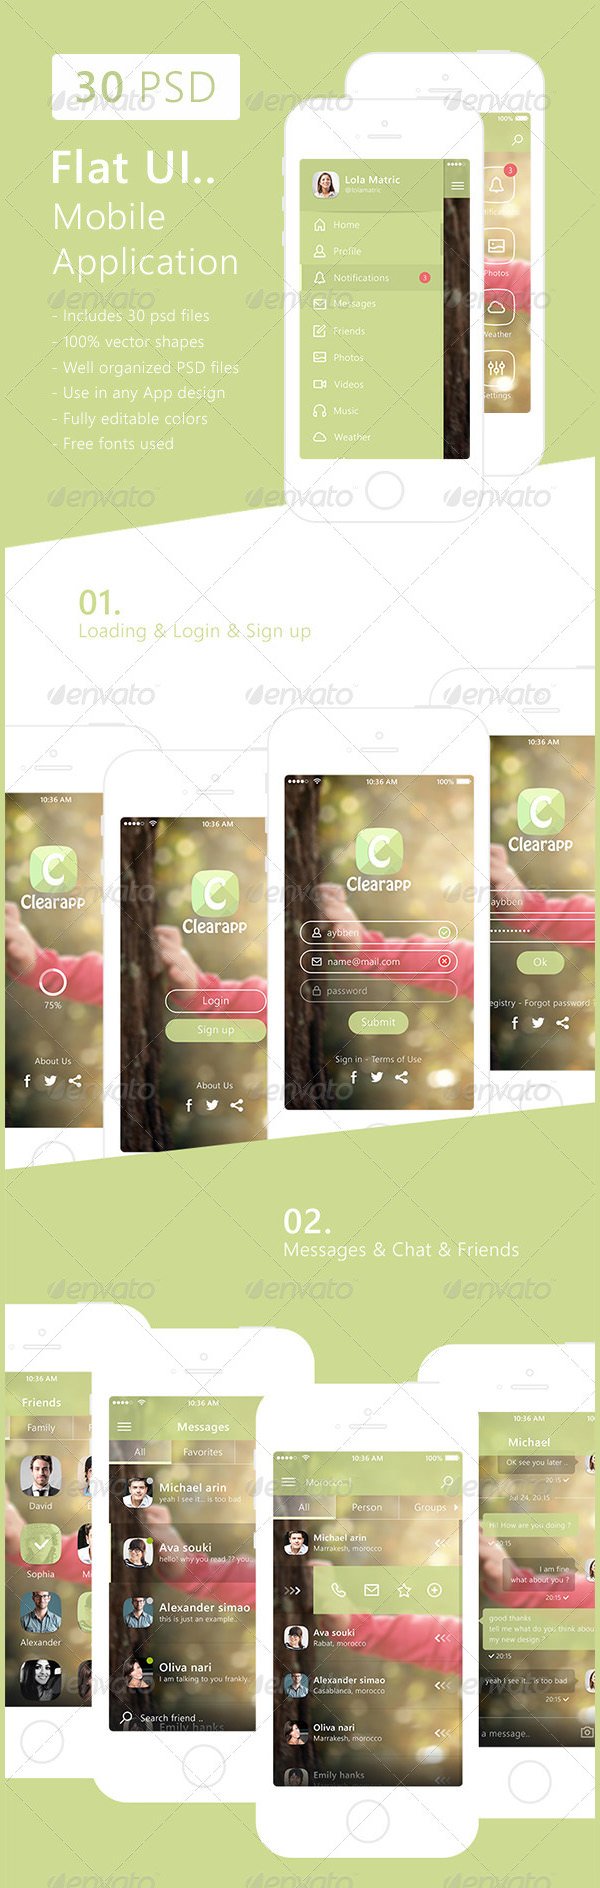 clearapp app ui design